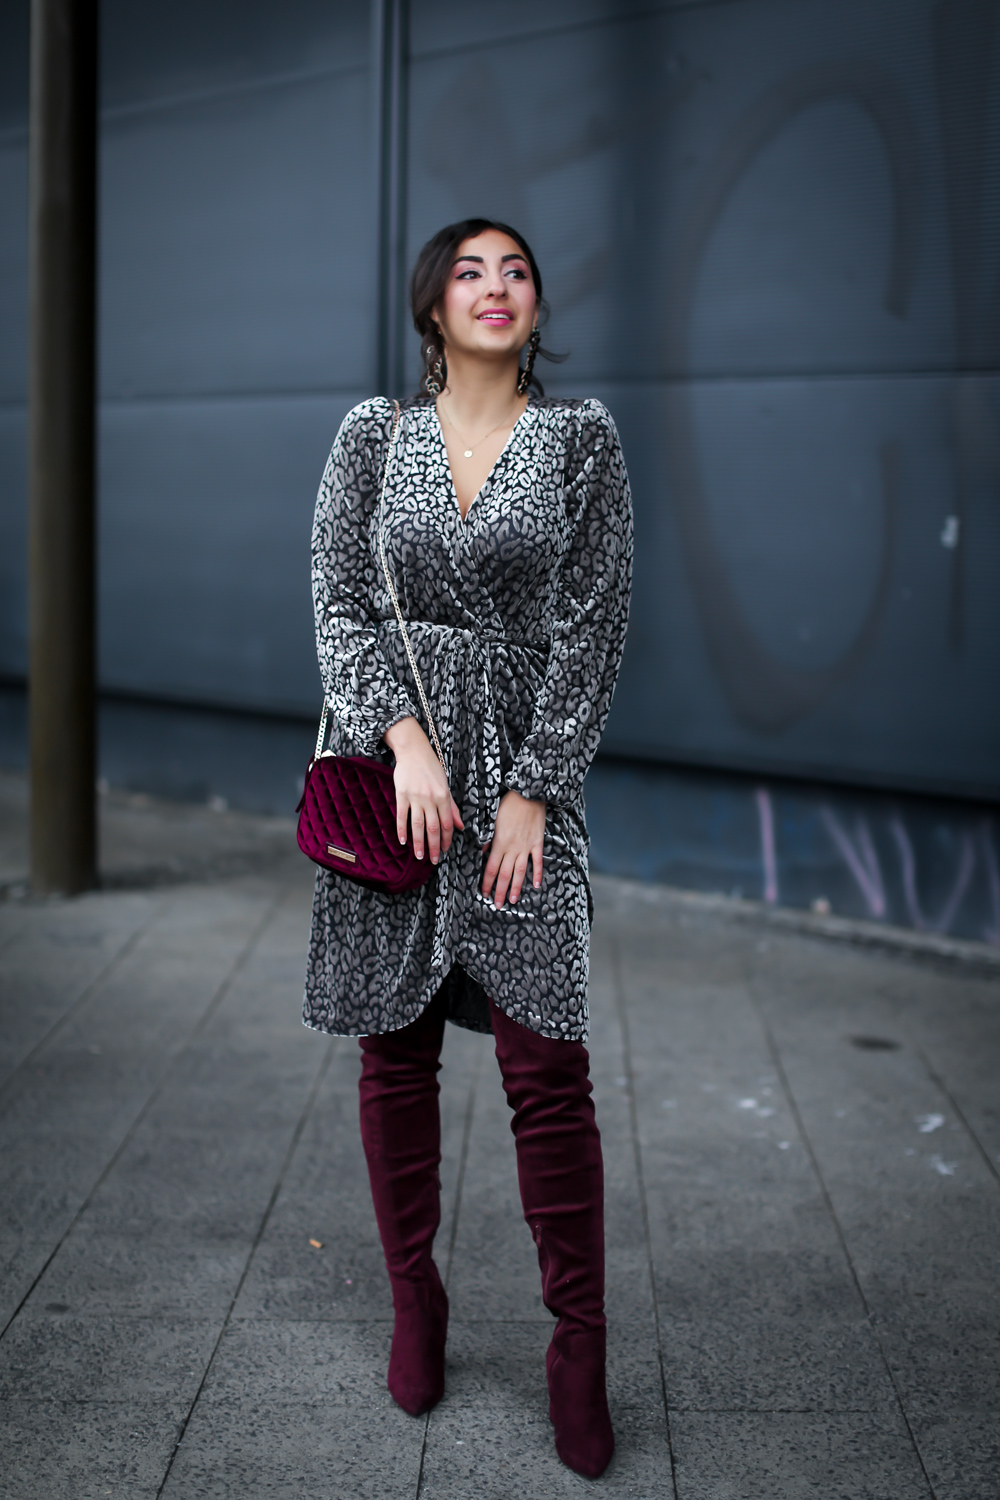 christmas look festive style 2018 velvet wrap dress leoprint loavies overknees outfit winter look streetstyle fashion modeblog berlin blog samieze